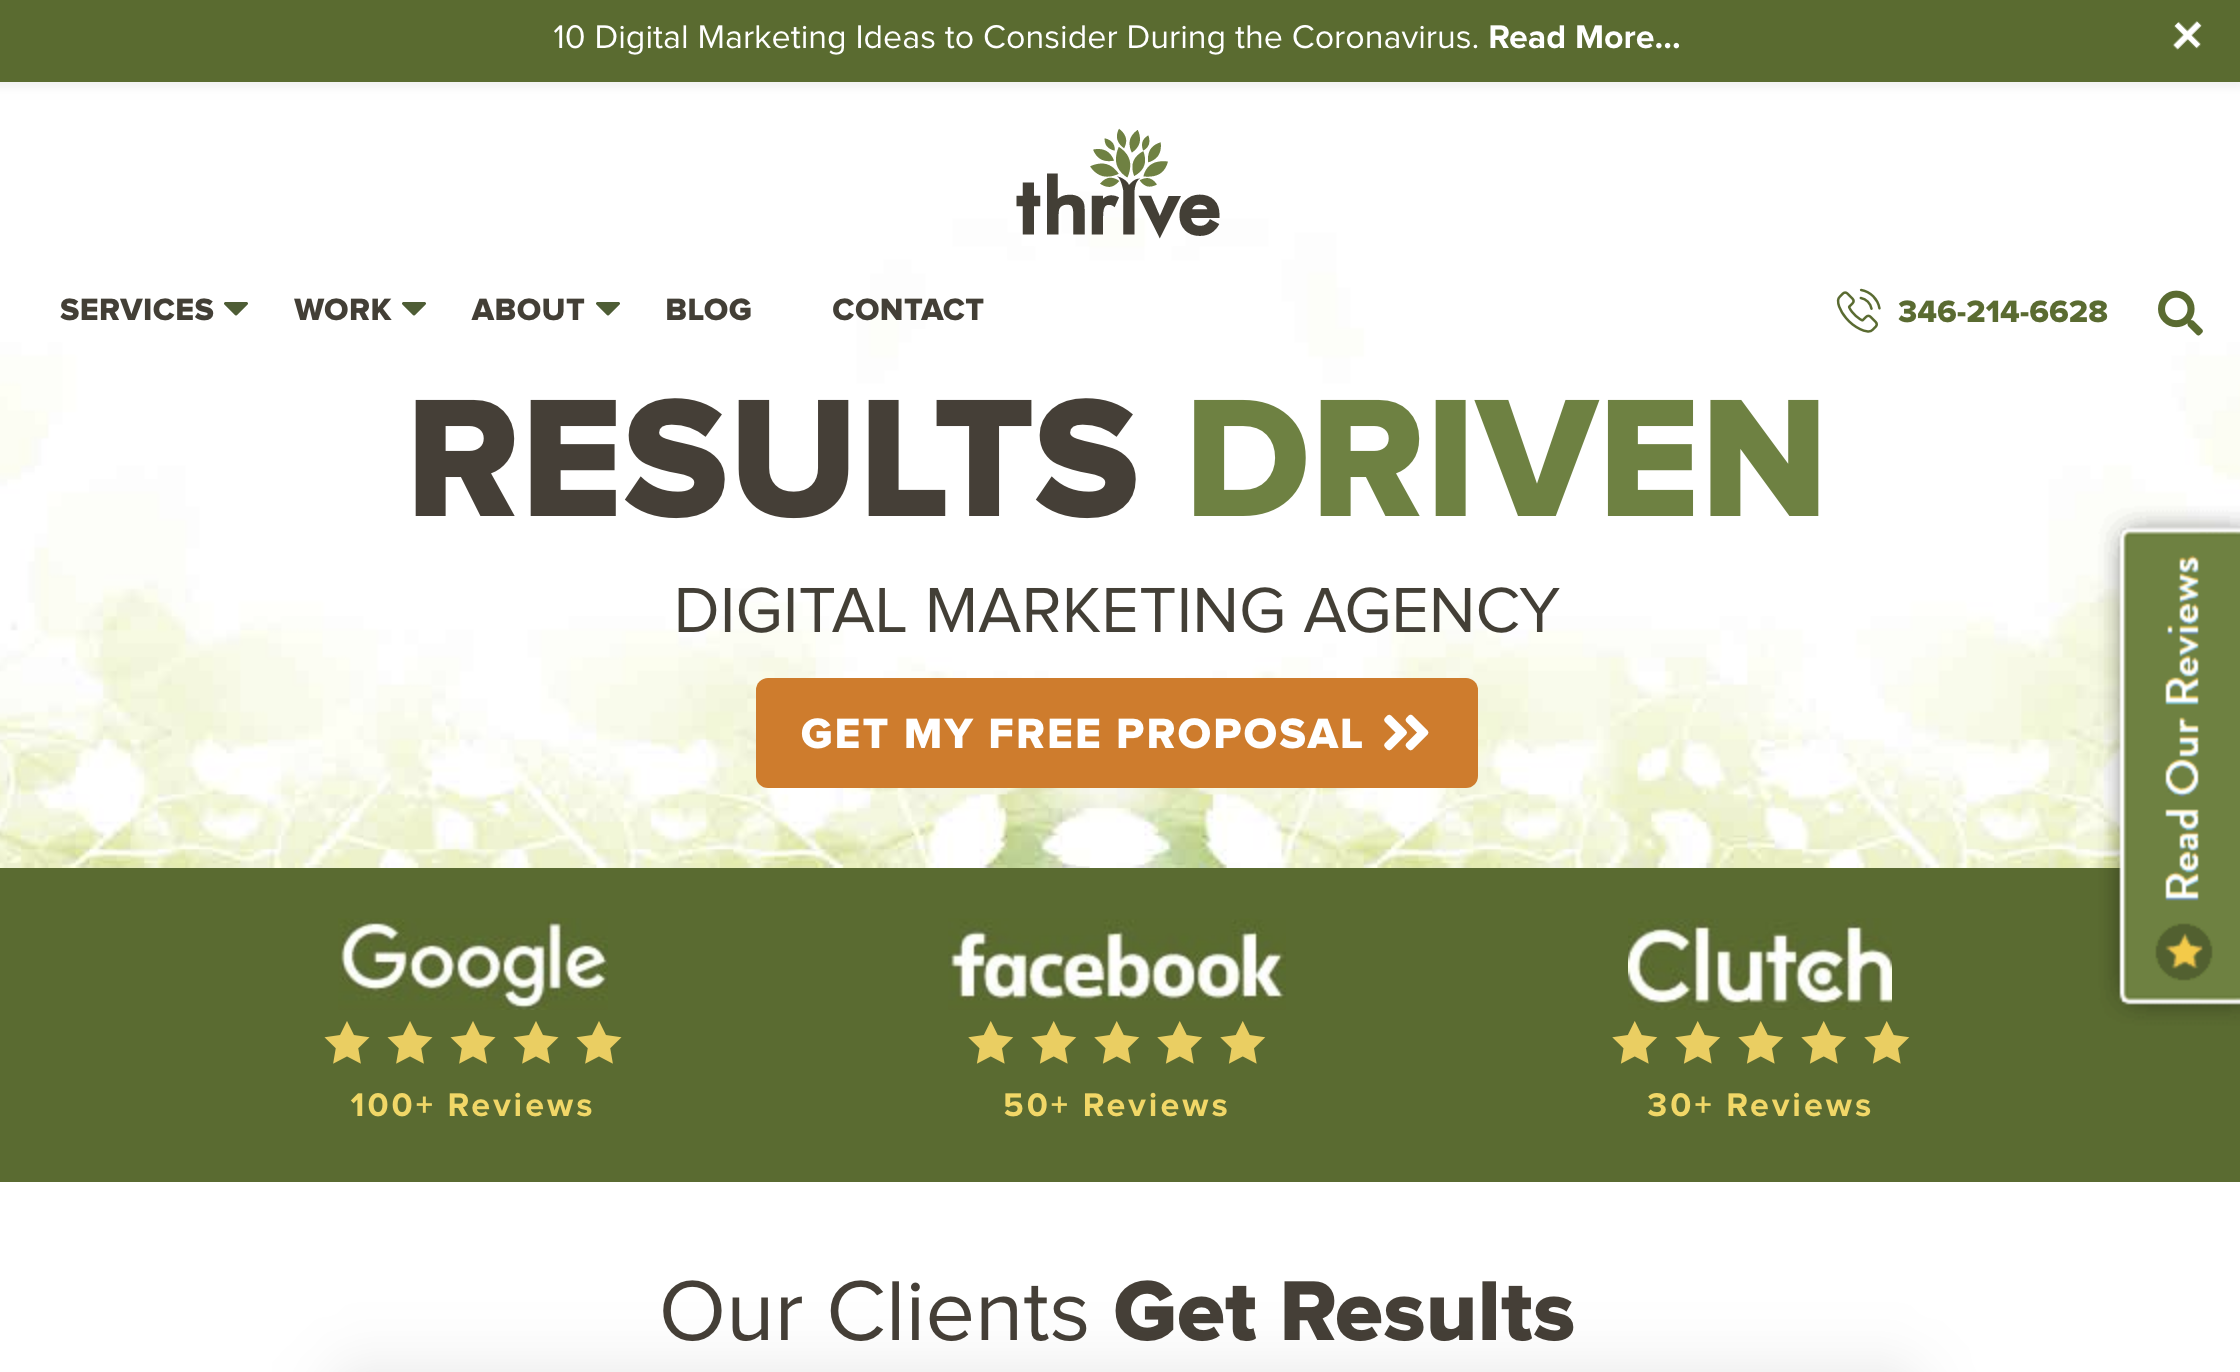 thrive digital marketing agency